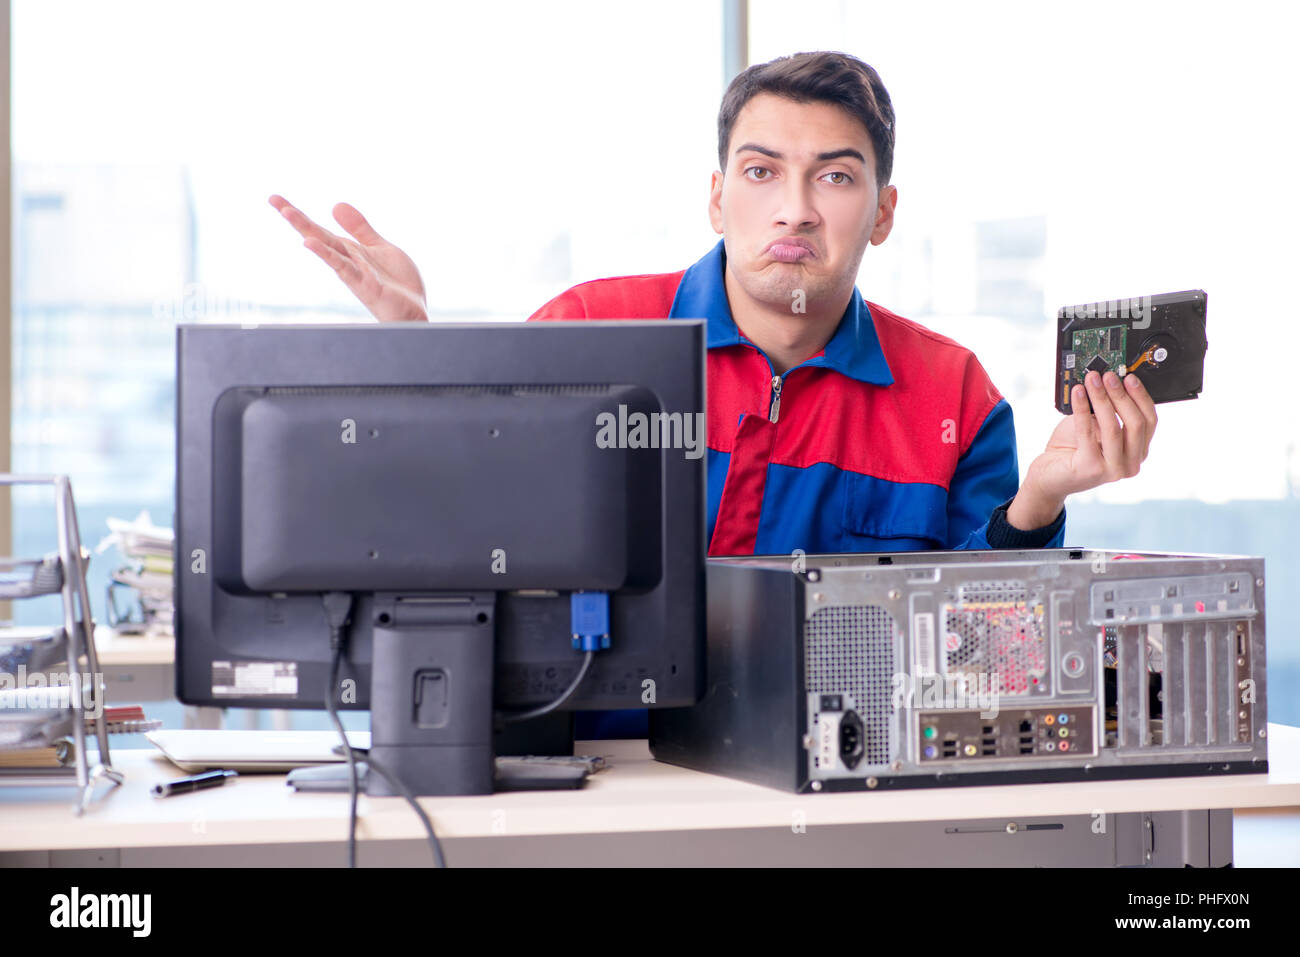 Data restoration specialist repairing corrupt hard drive Stock Photo